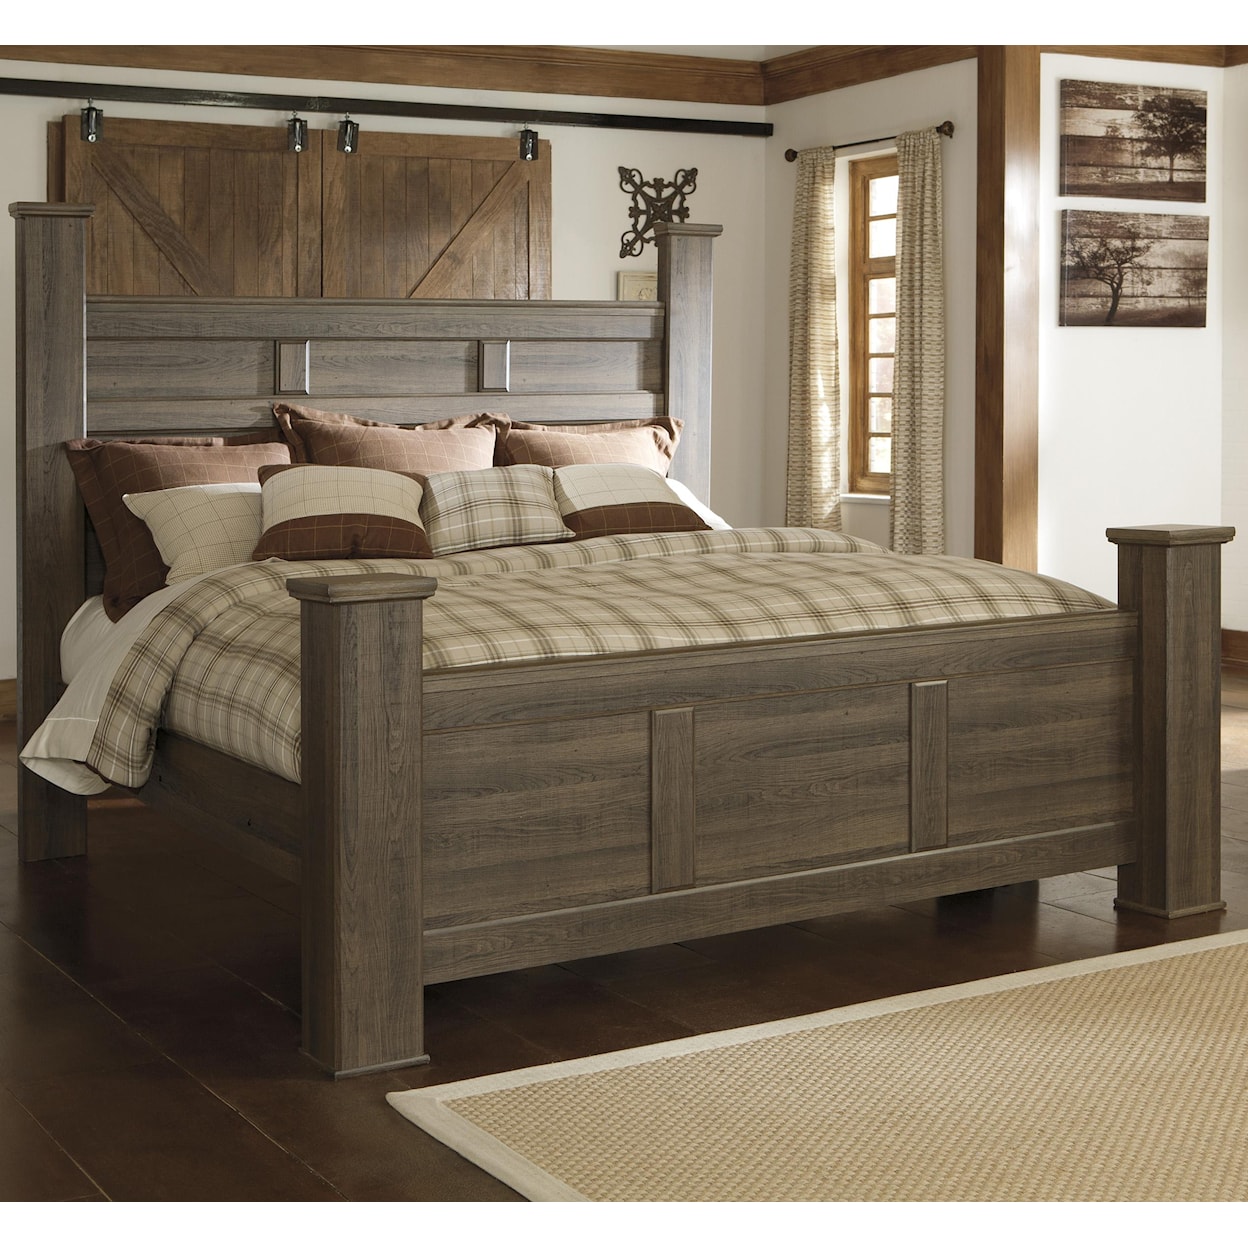 Ashley Furniture Signature Design Juararo California King Poster Bed